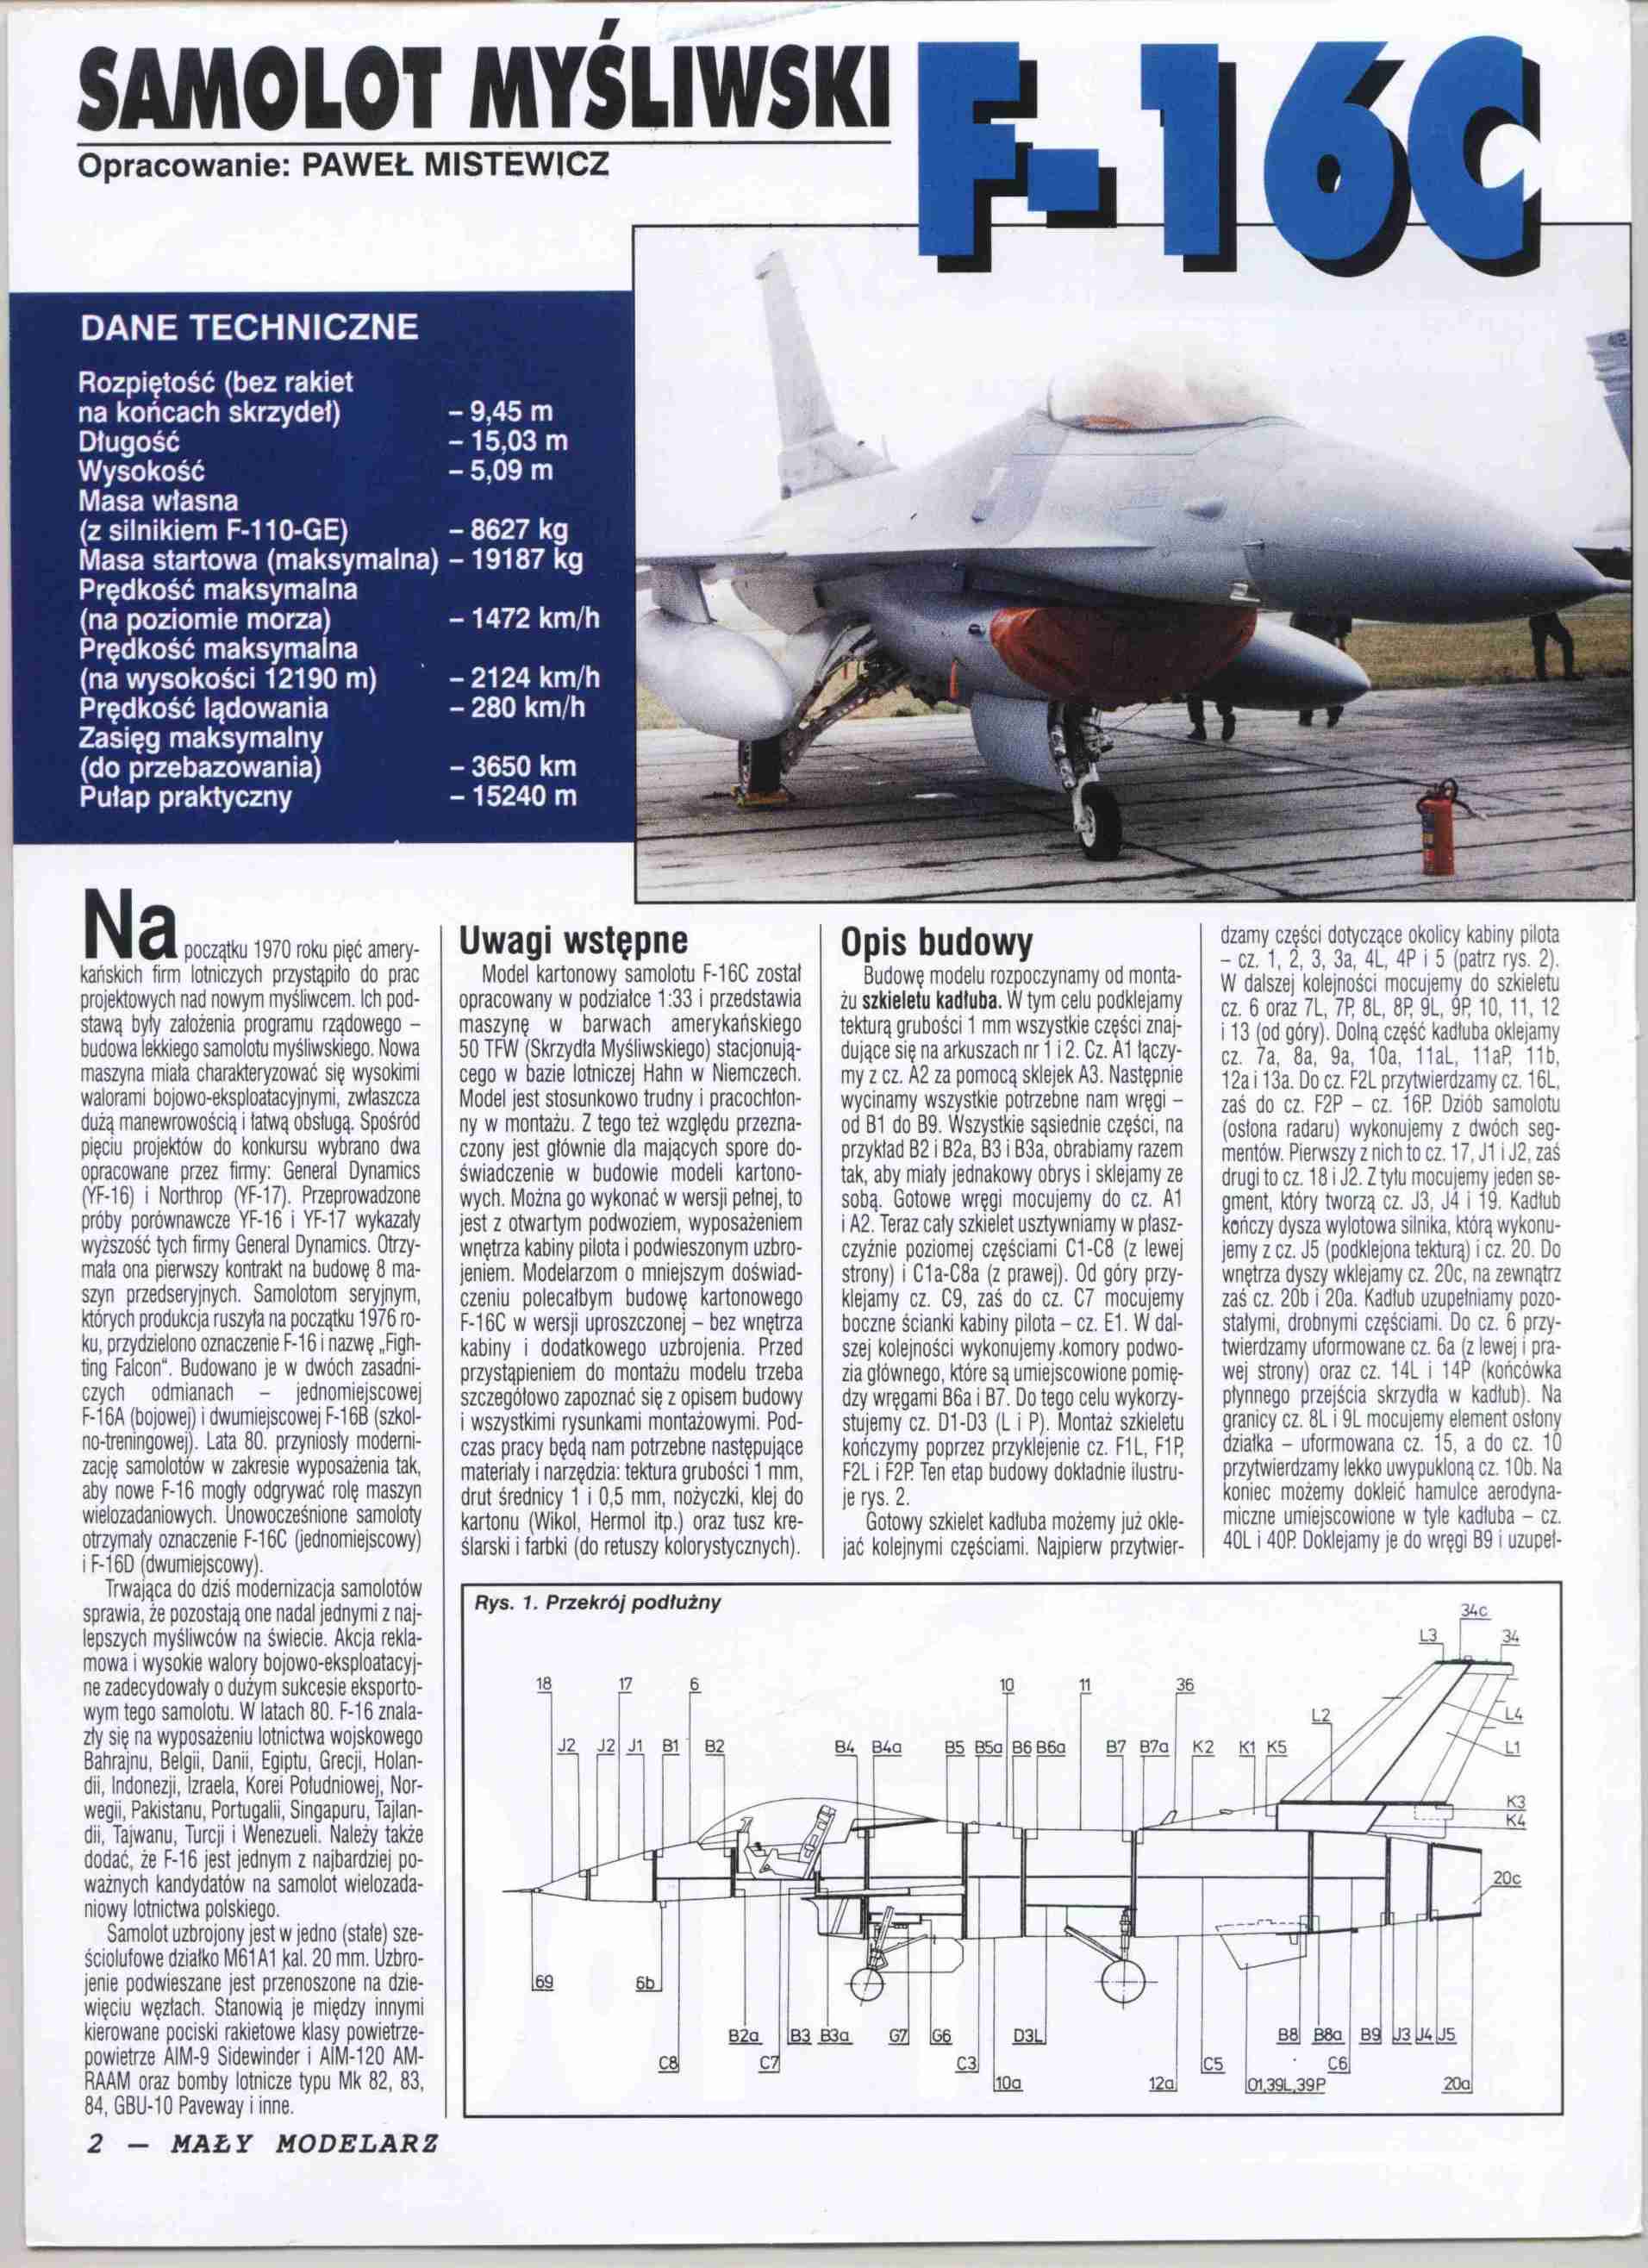 "Maly Modelarz" 4-5, 1999, 2 c.